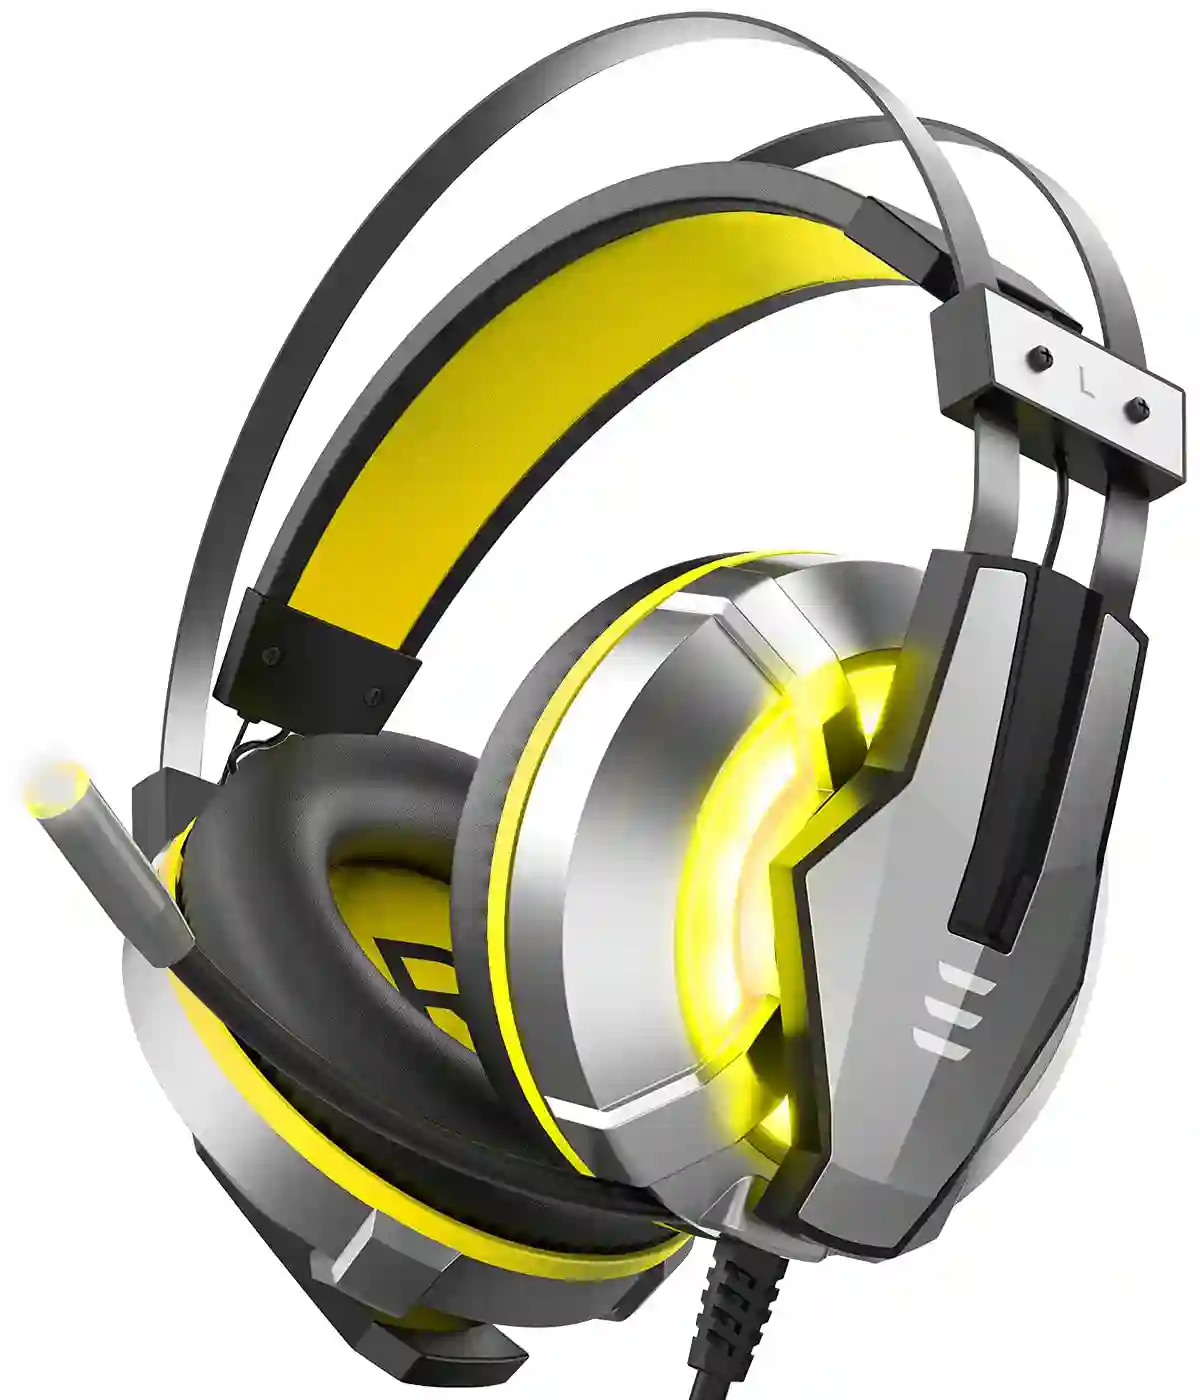 EKSA E800 Wired Stereo Gaming Headset